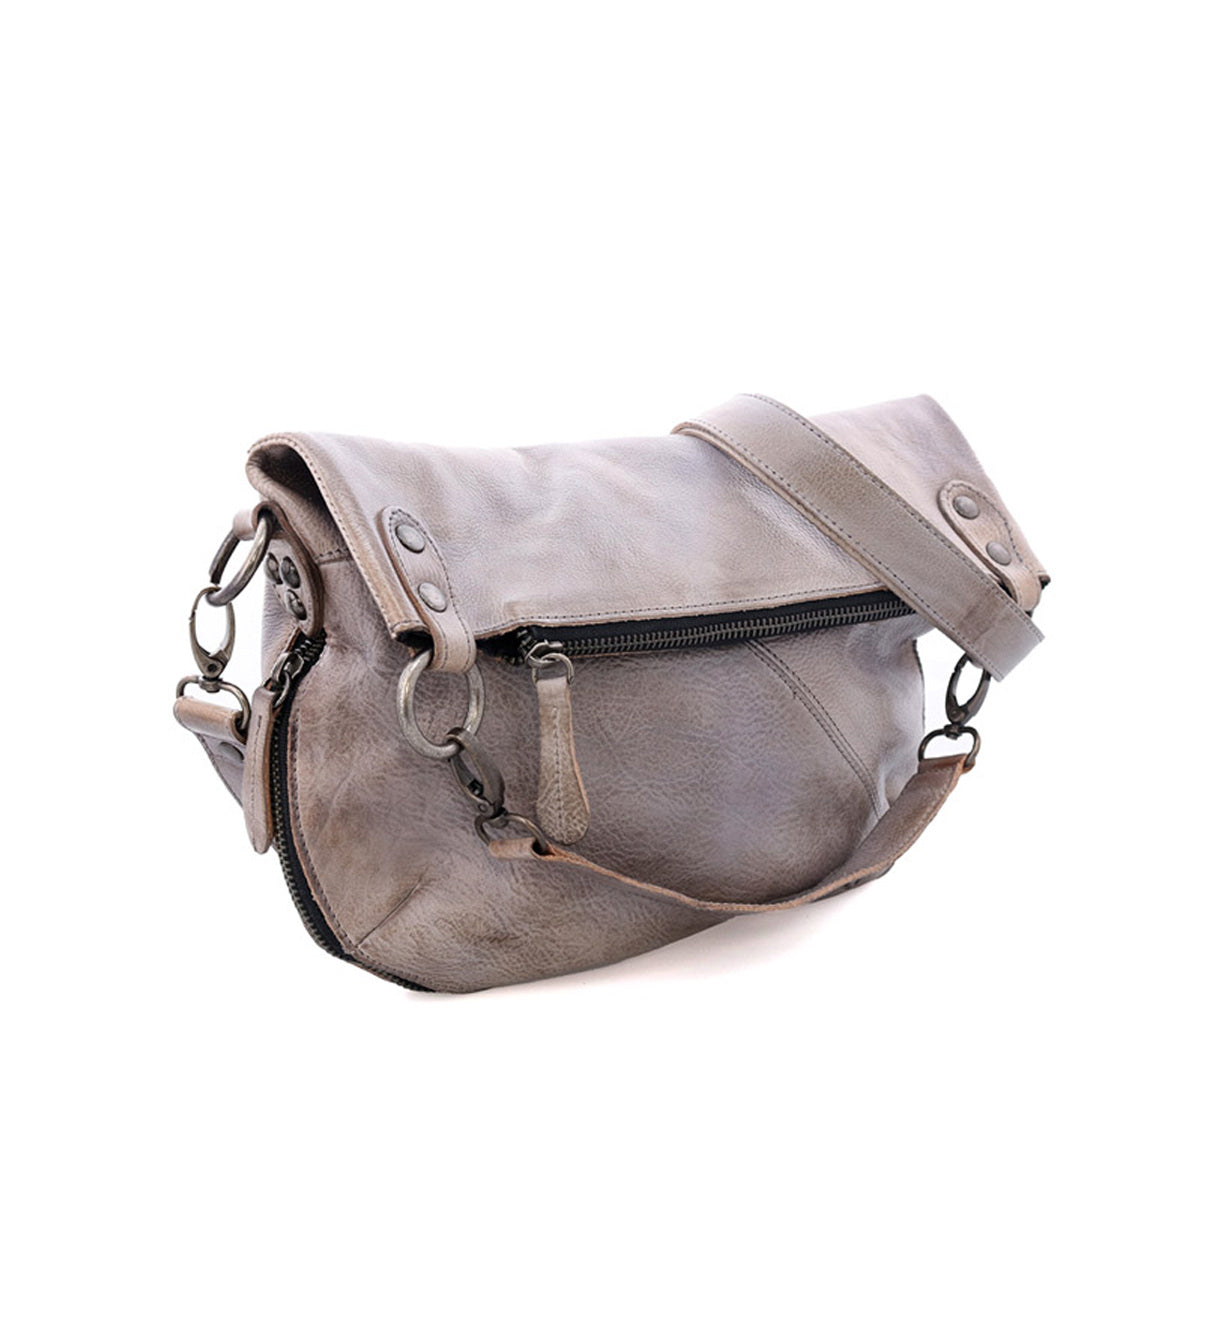 A grey leather Tahiti crossbody bag with a Bed Stu strap.